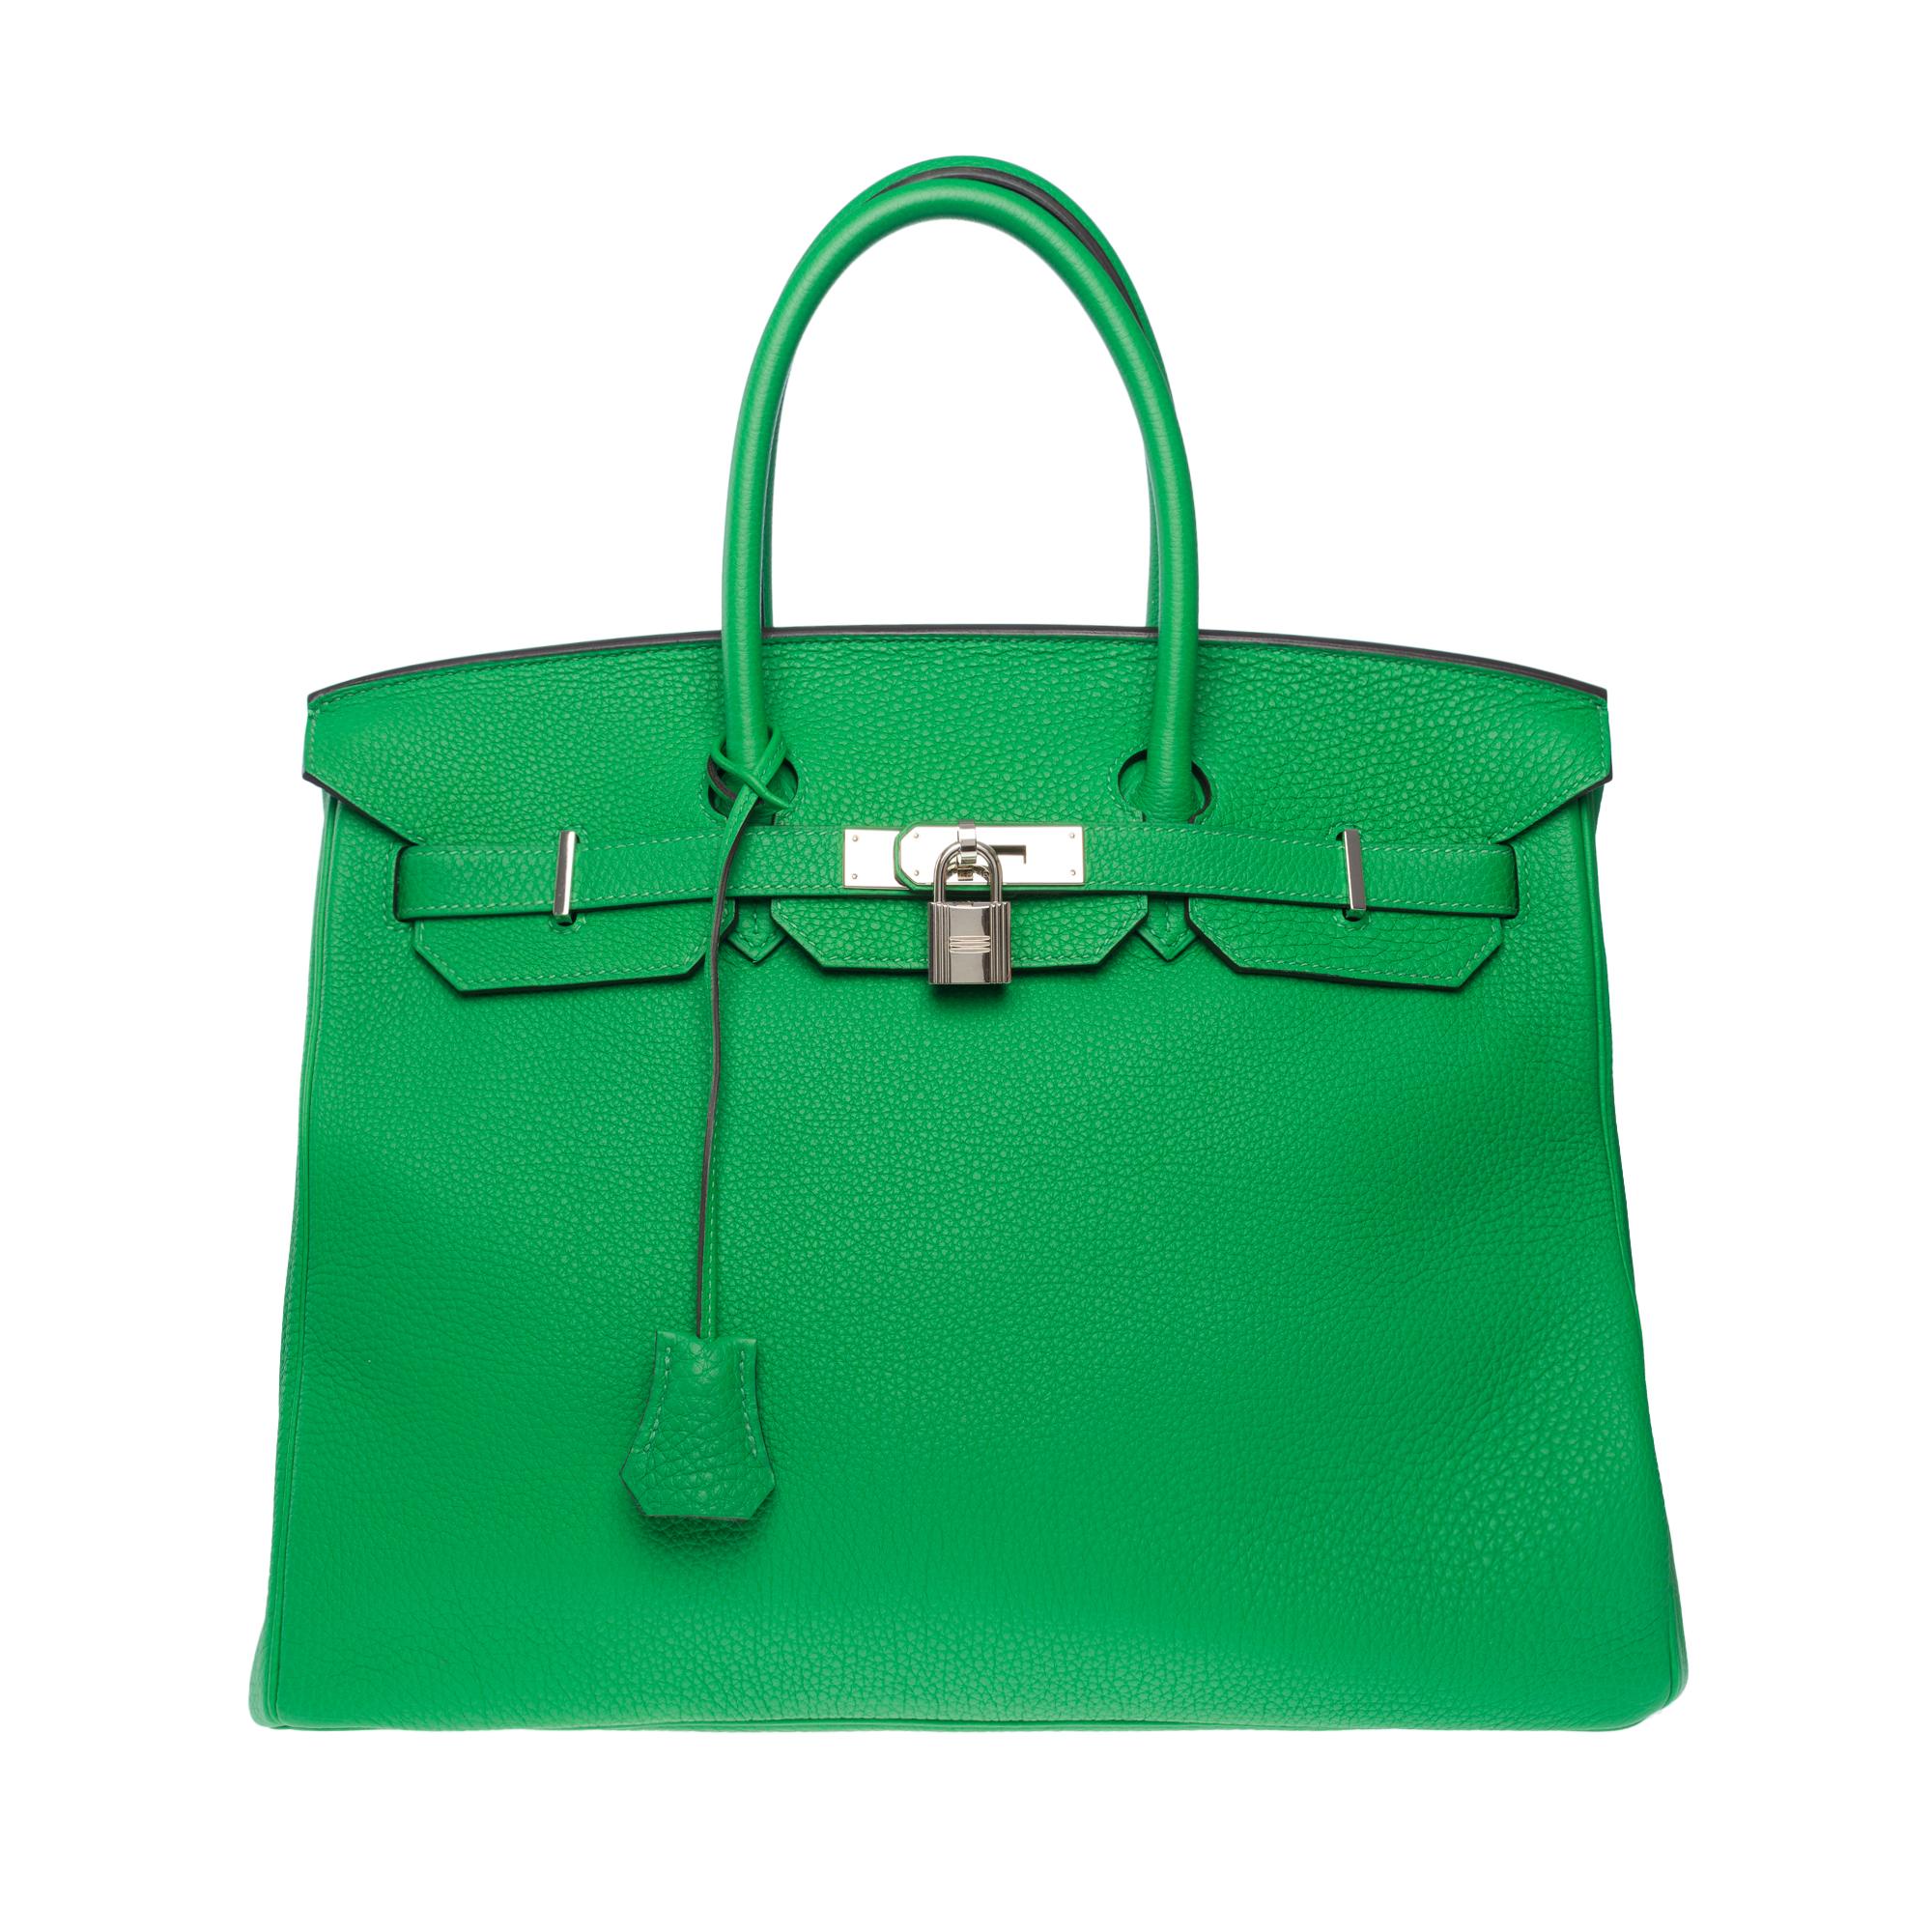 Women's or Men's Fantastic Hermès Birkin 35 handbag in Green Bamboo Togo leather, SHW For Sale